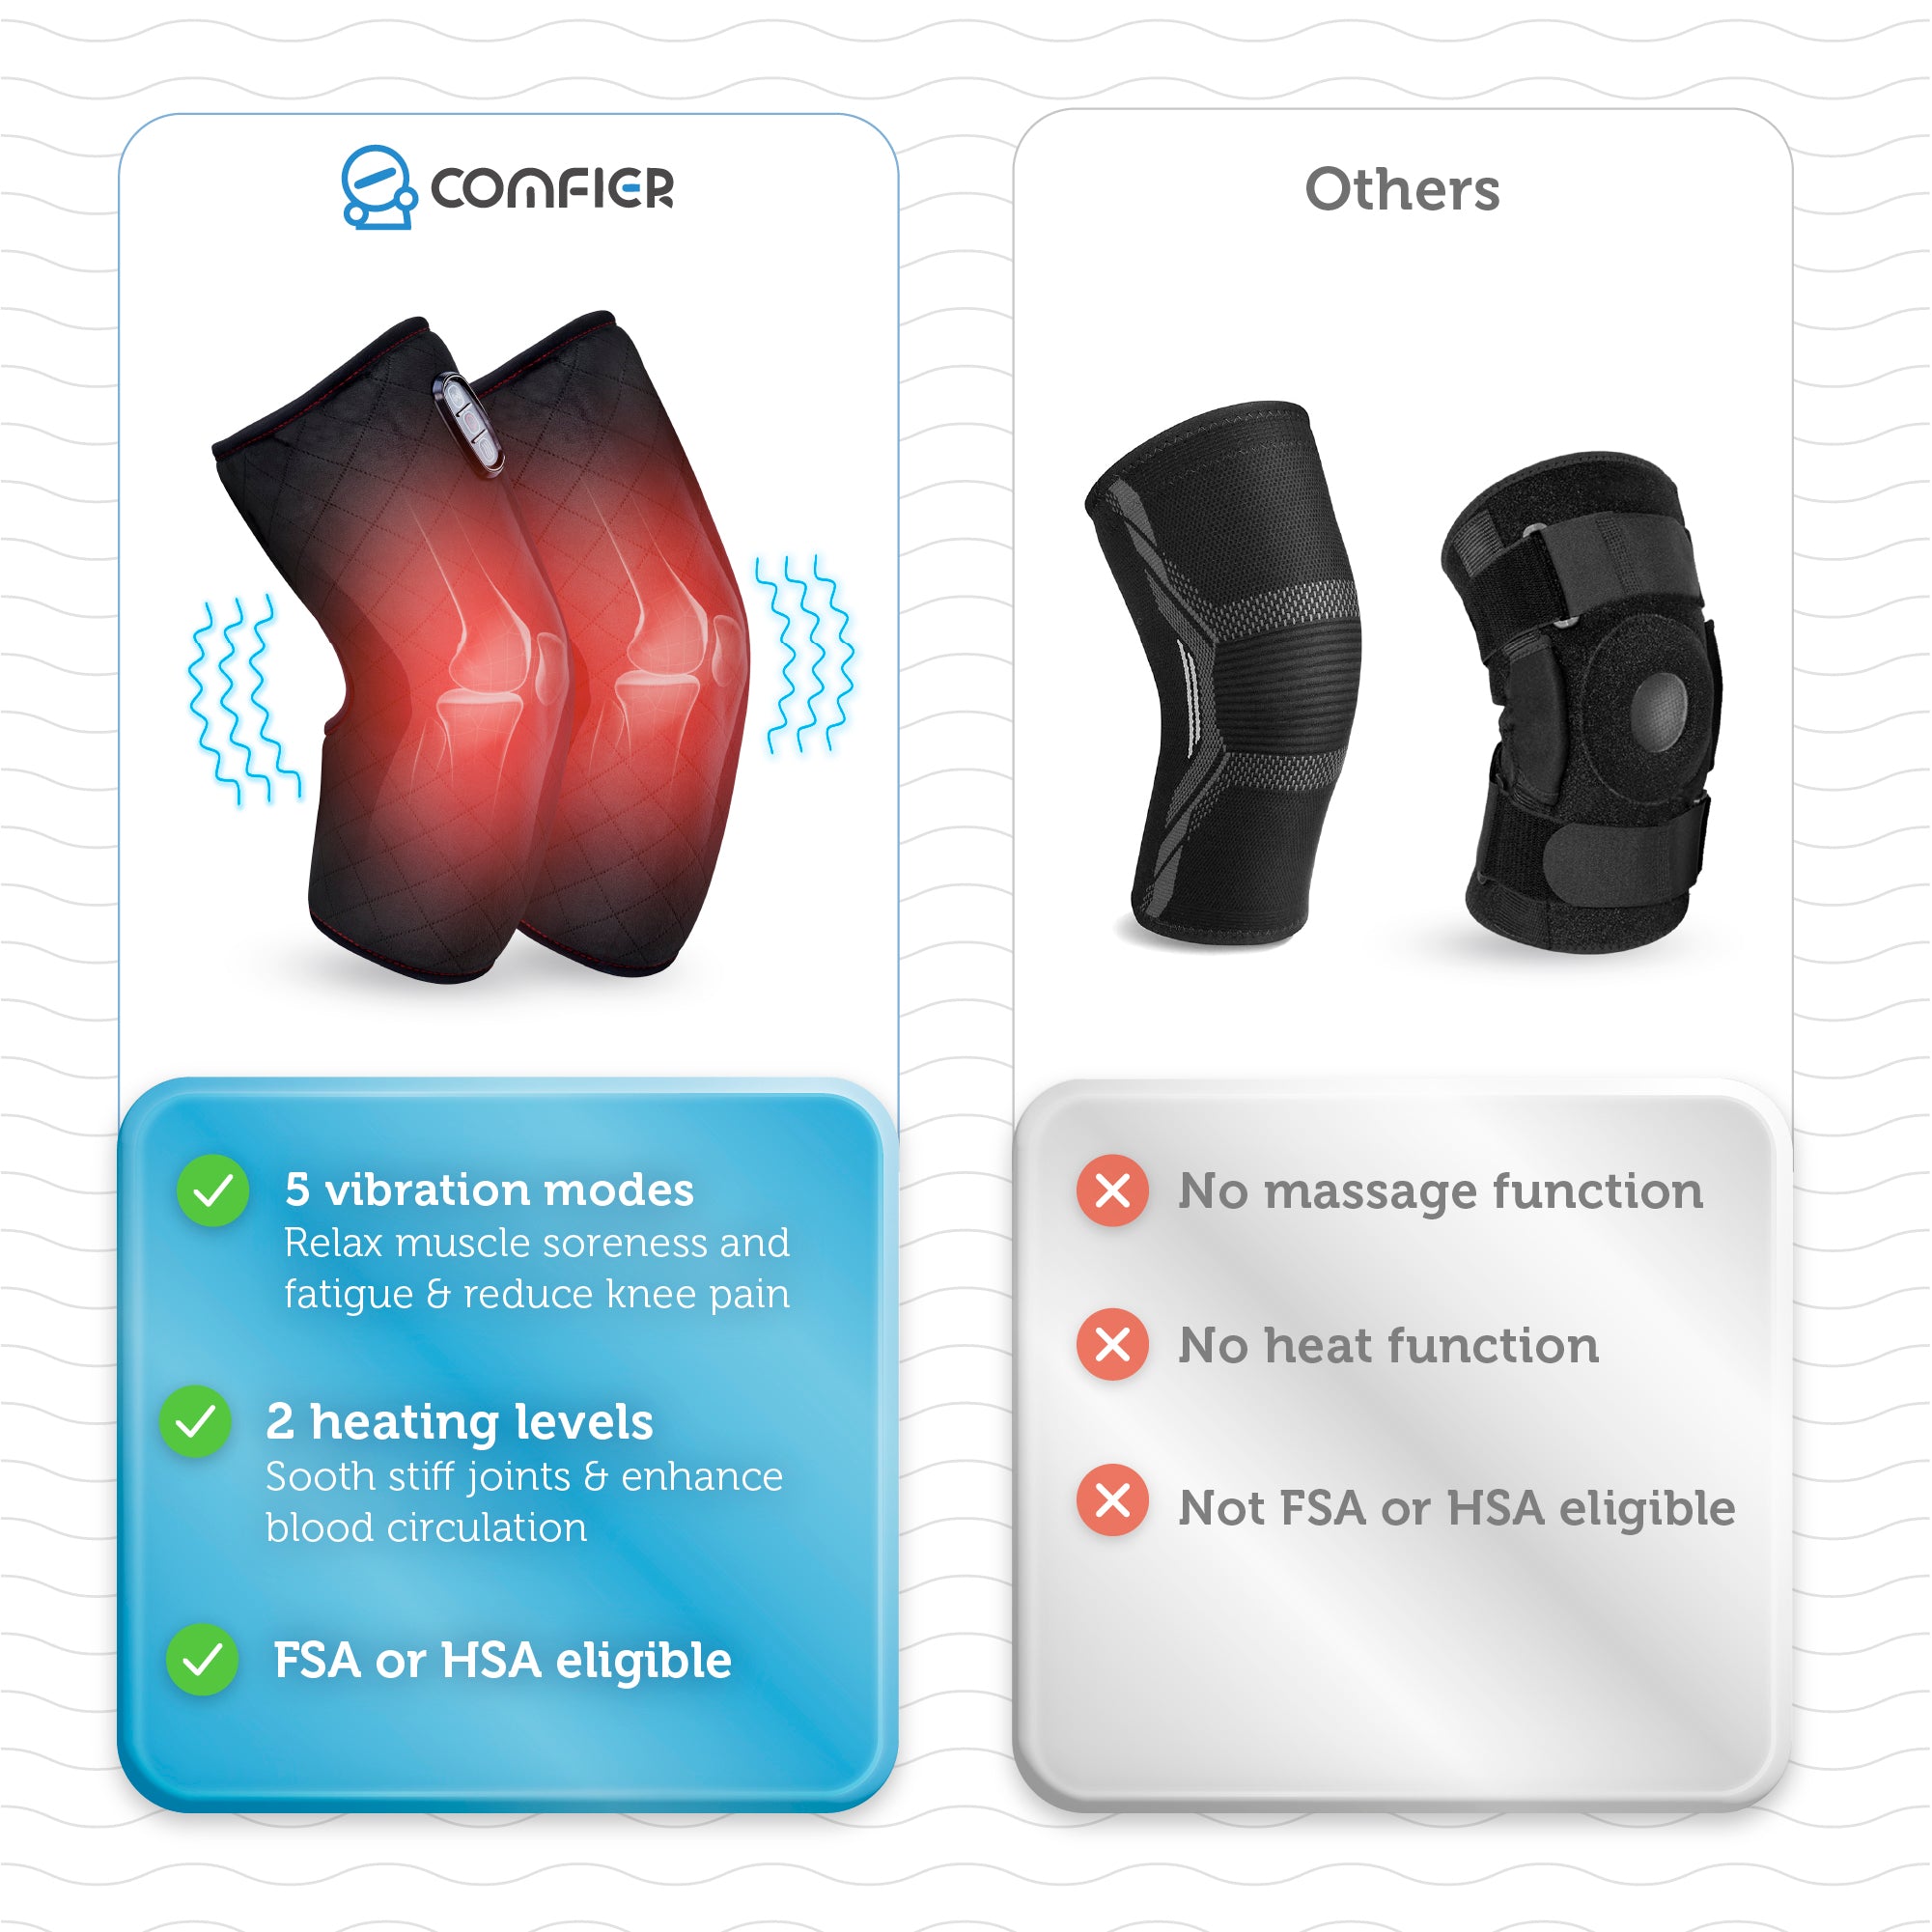 Comfier Heated Knee Brace review: An easy remedy for arthritis